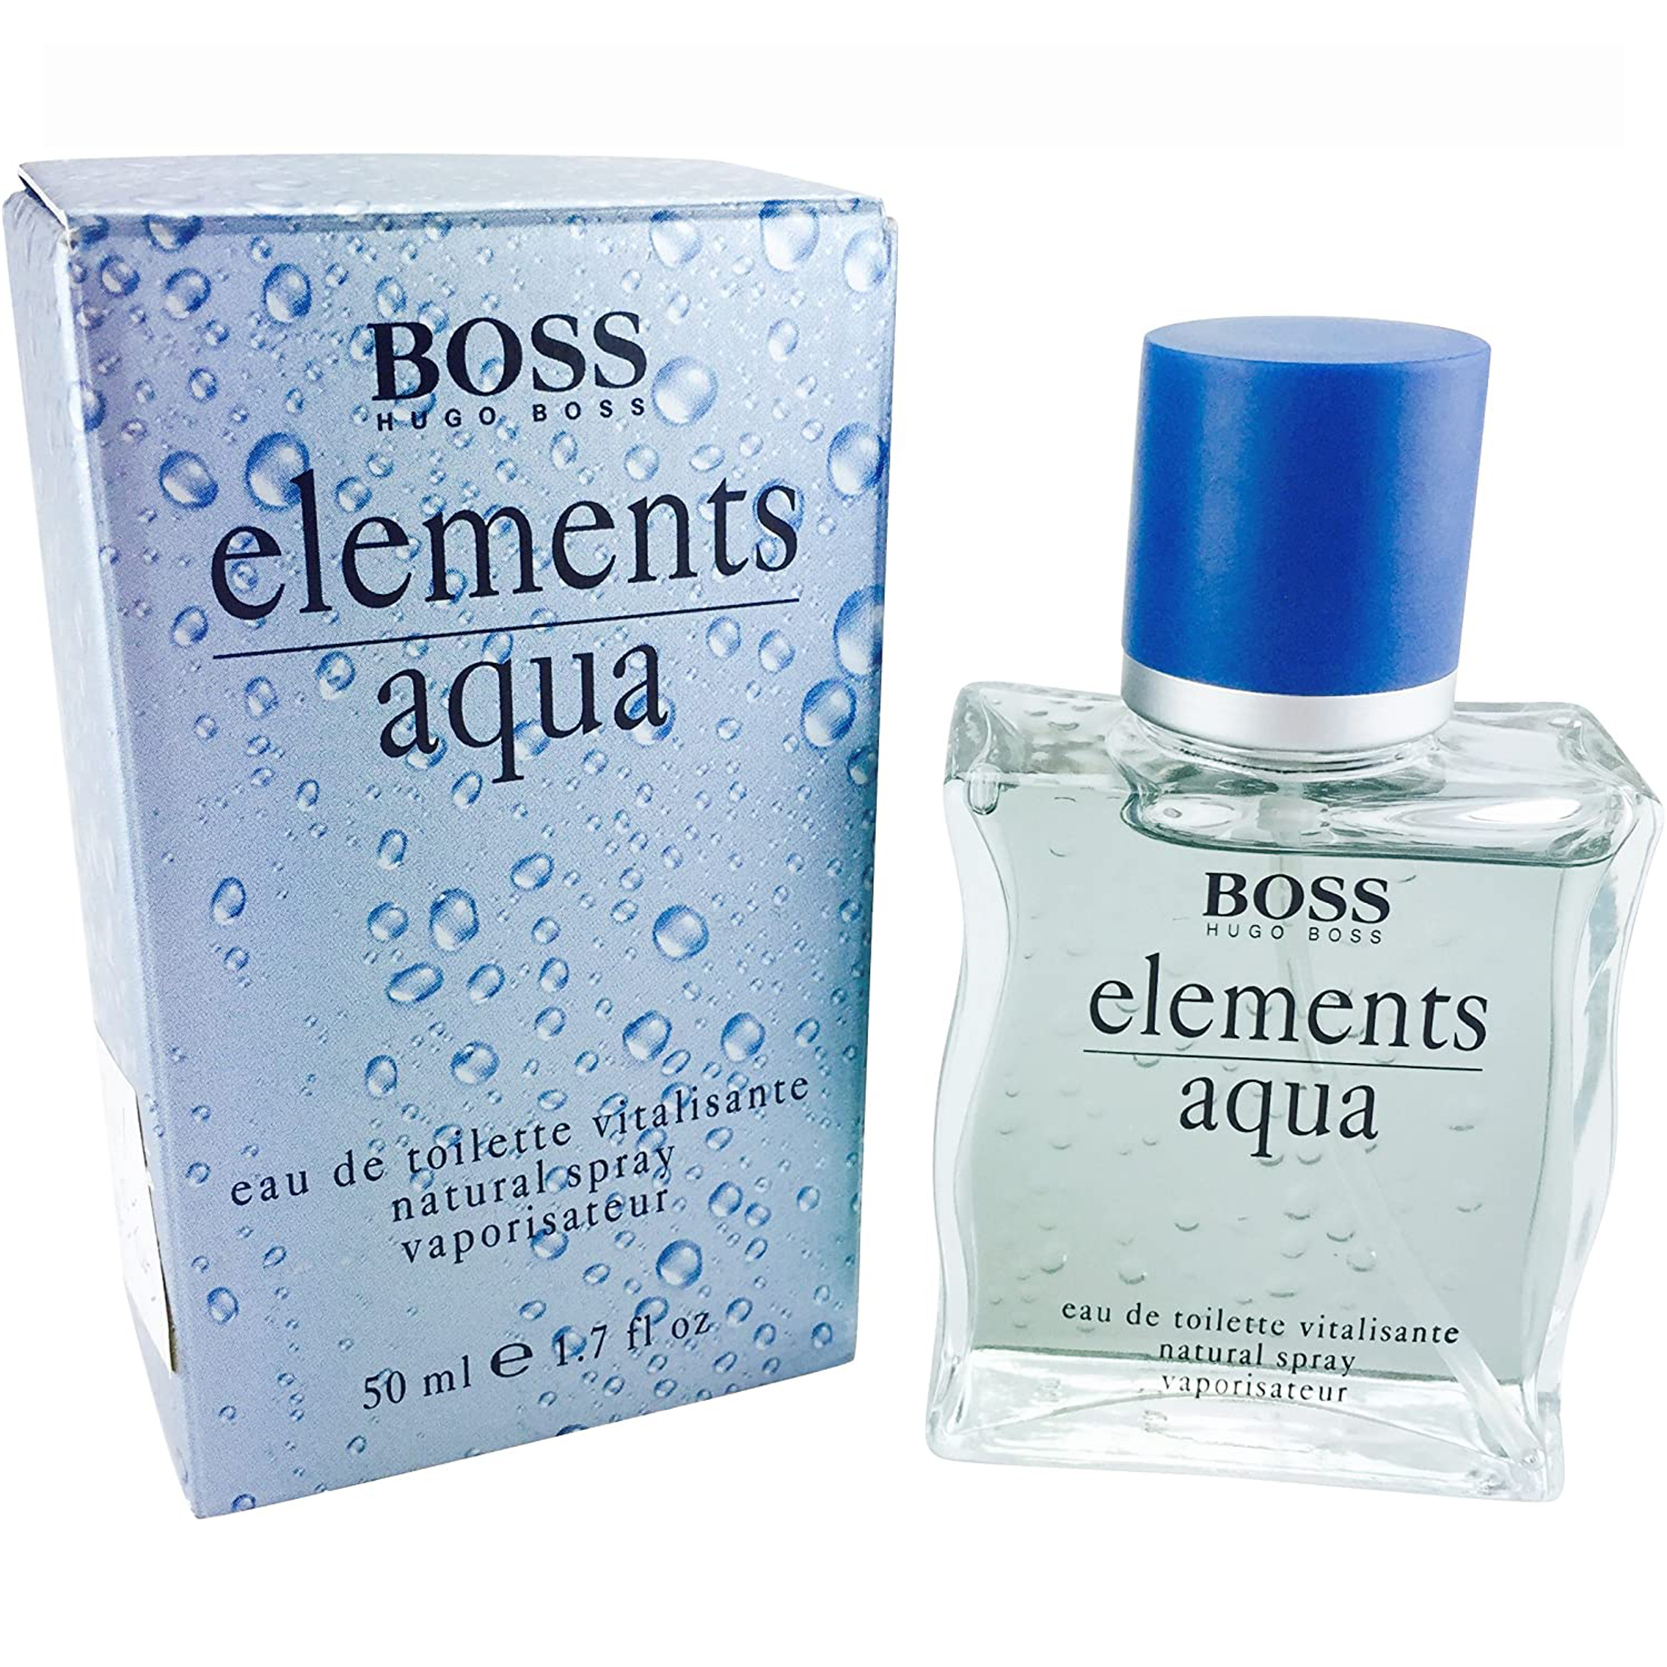 hugo boss boss elements aqua